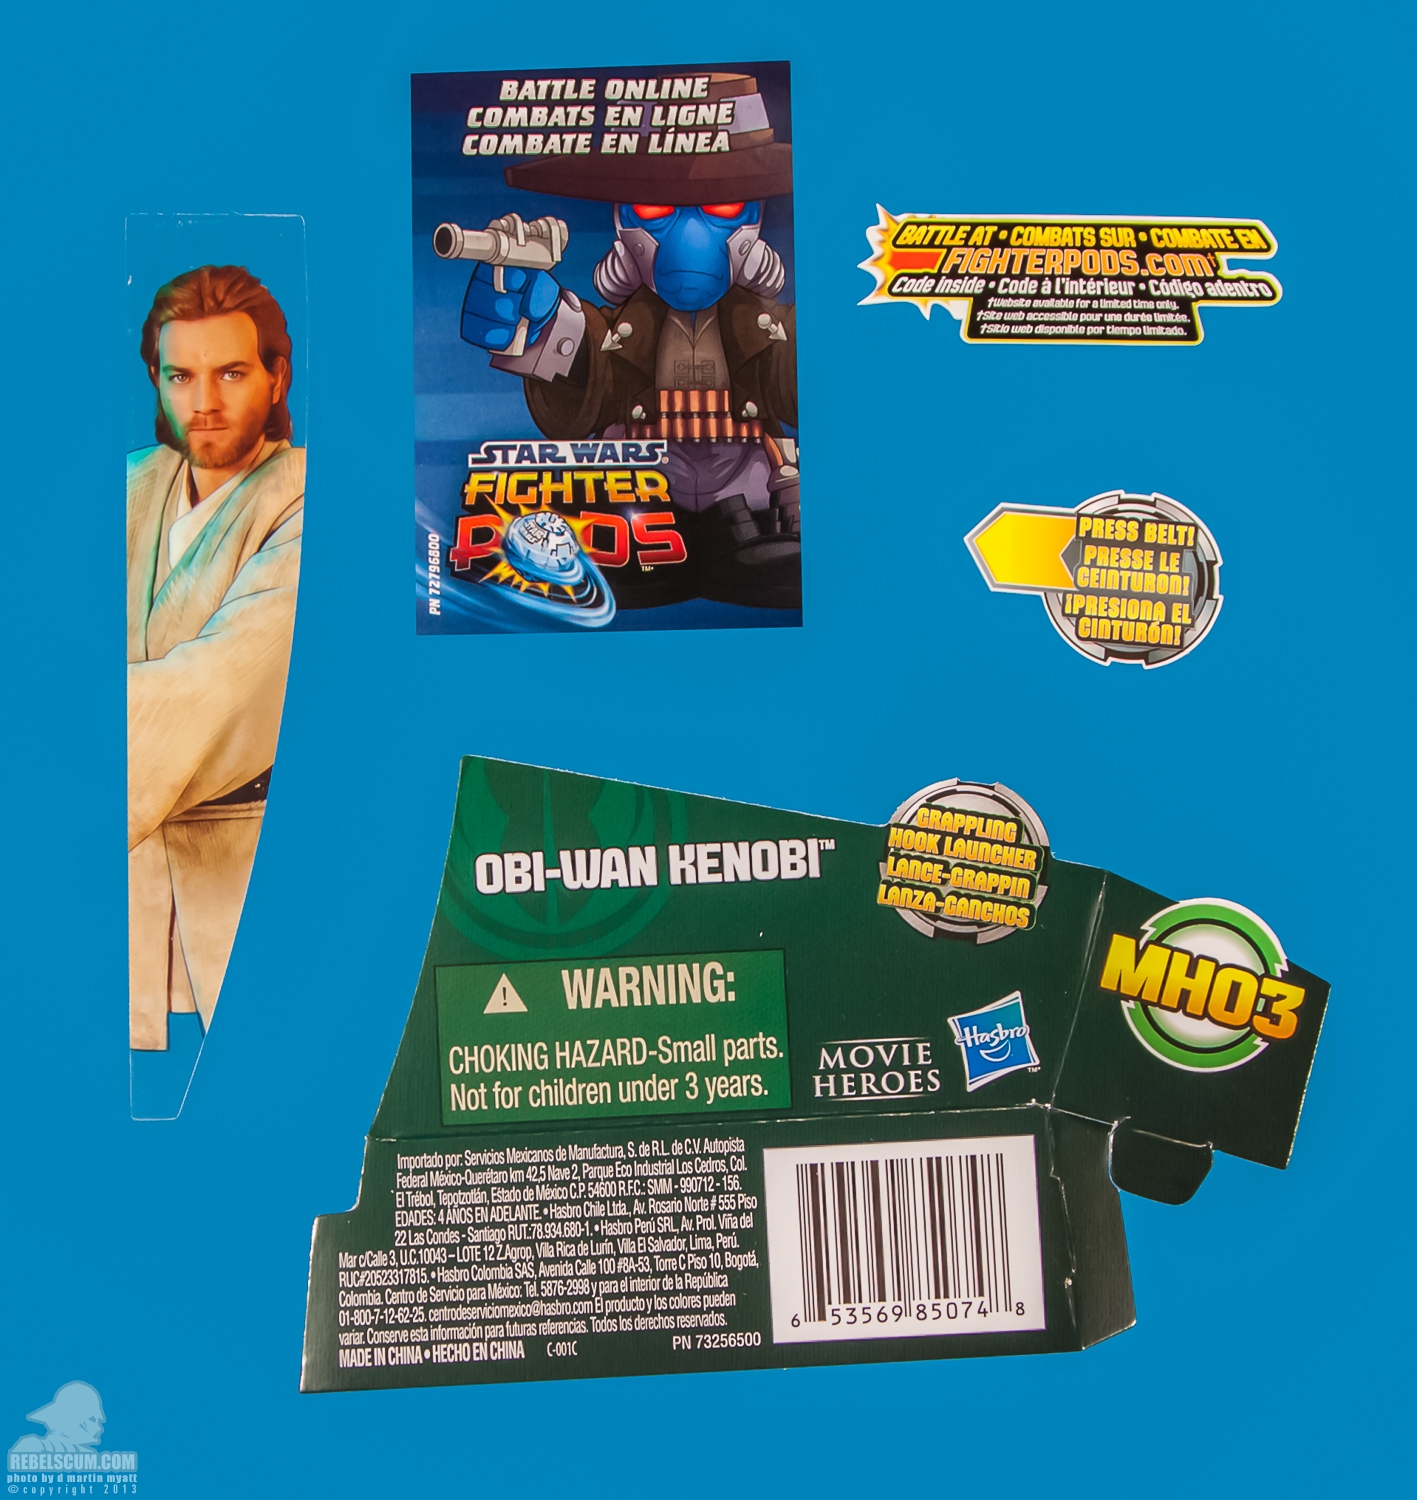 MH03_2013_Obi-Wan_Kenobi_Movie_Heroes_Star_Wars-20.jpg